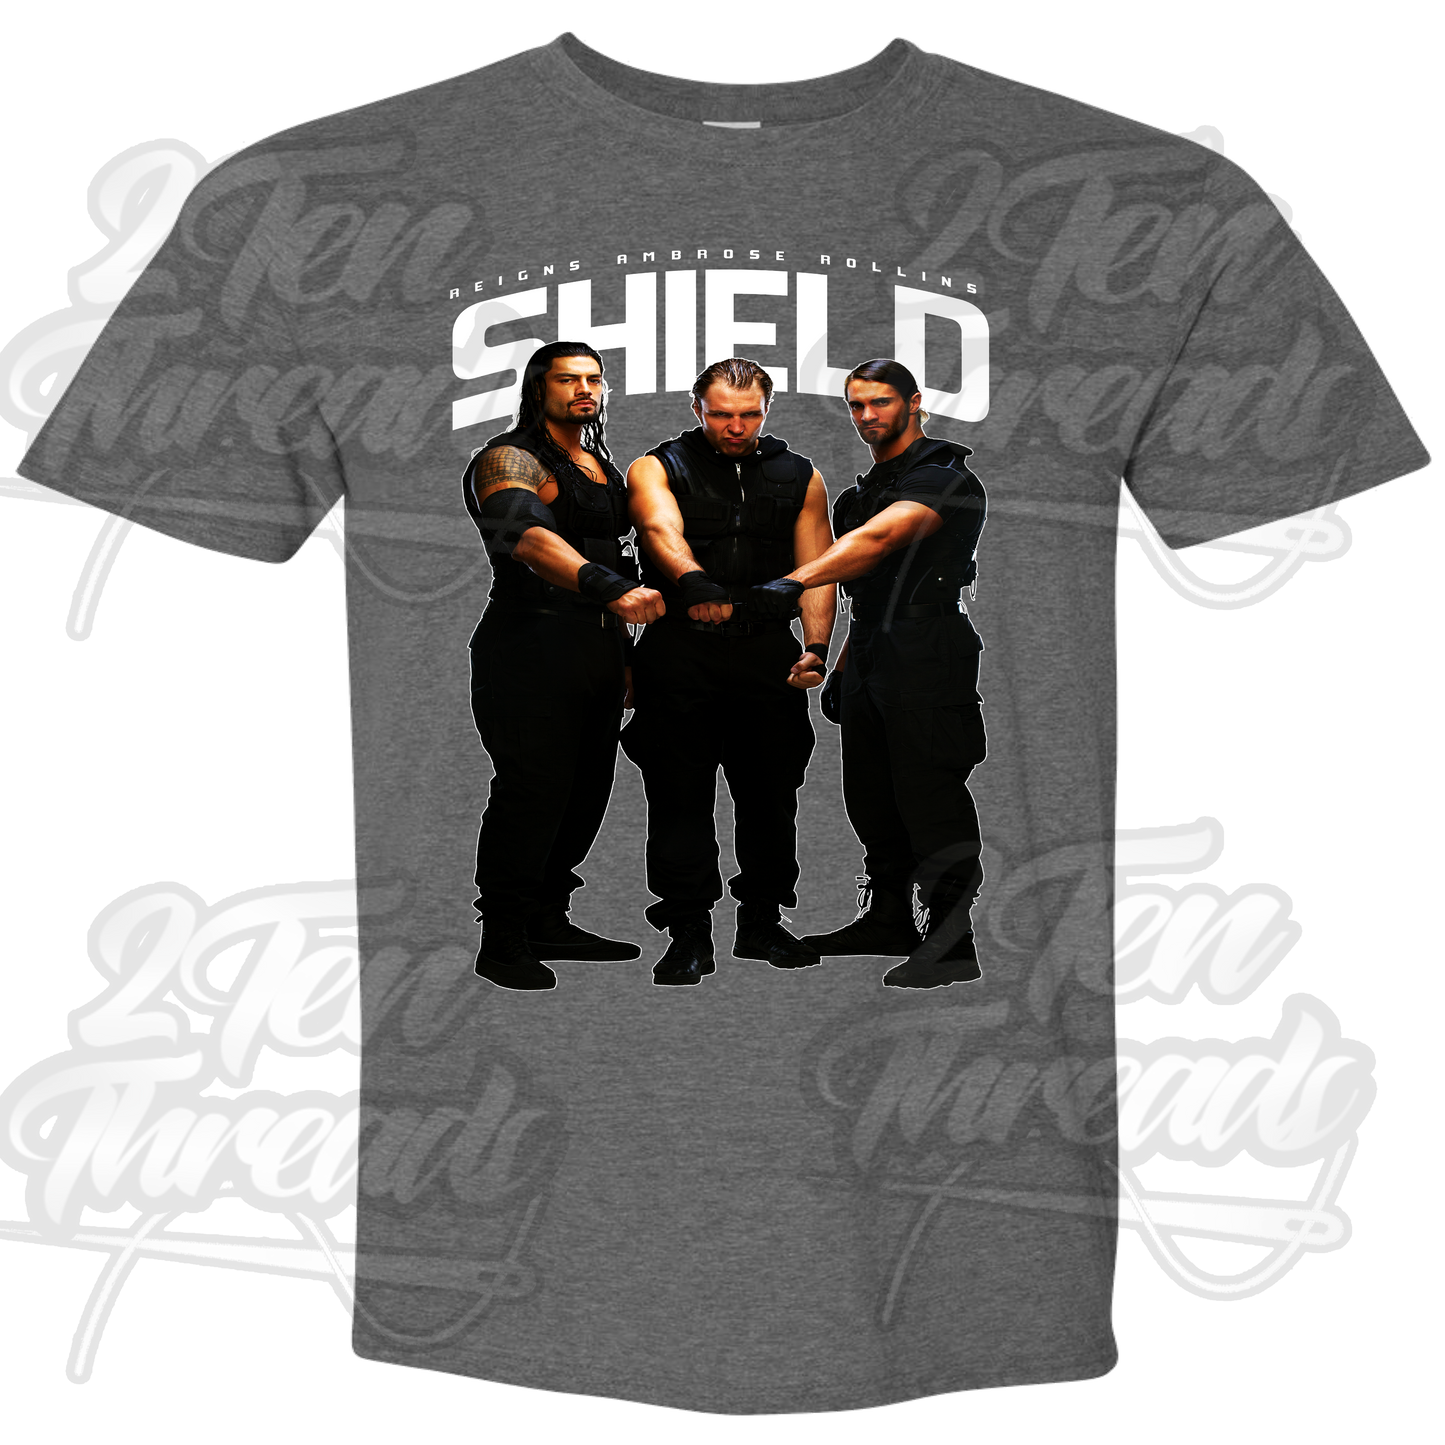 The Sheild Shirt